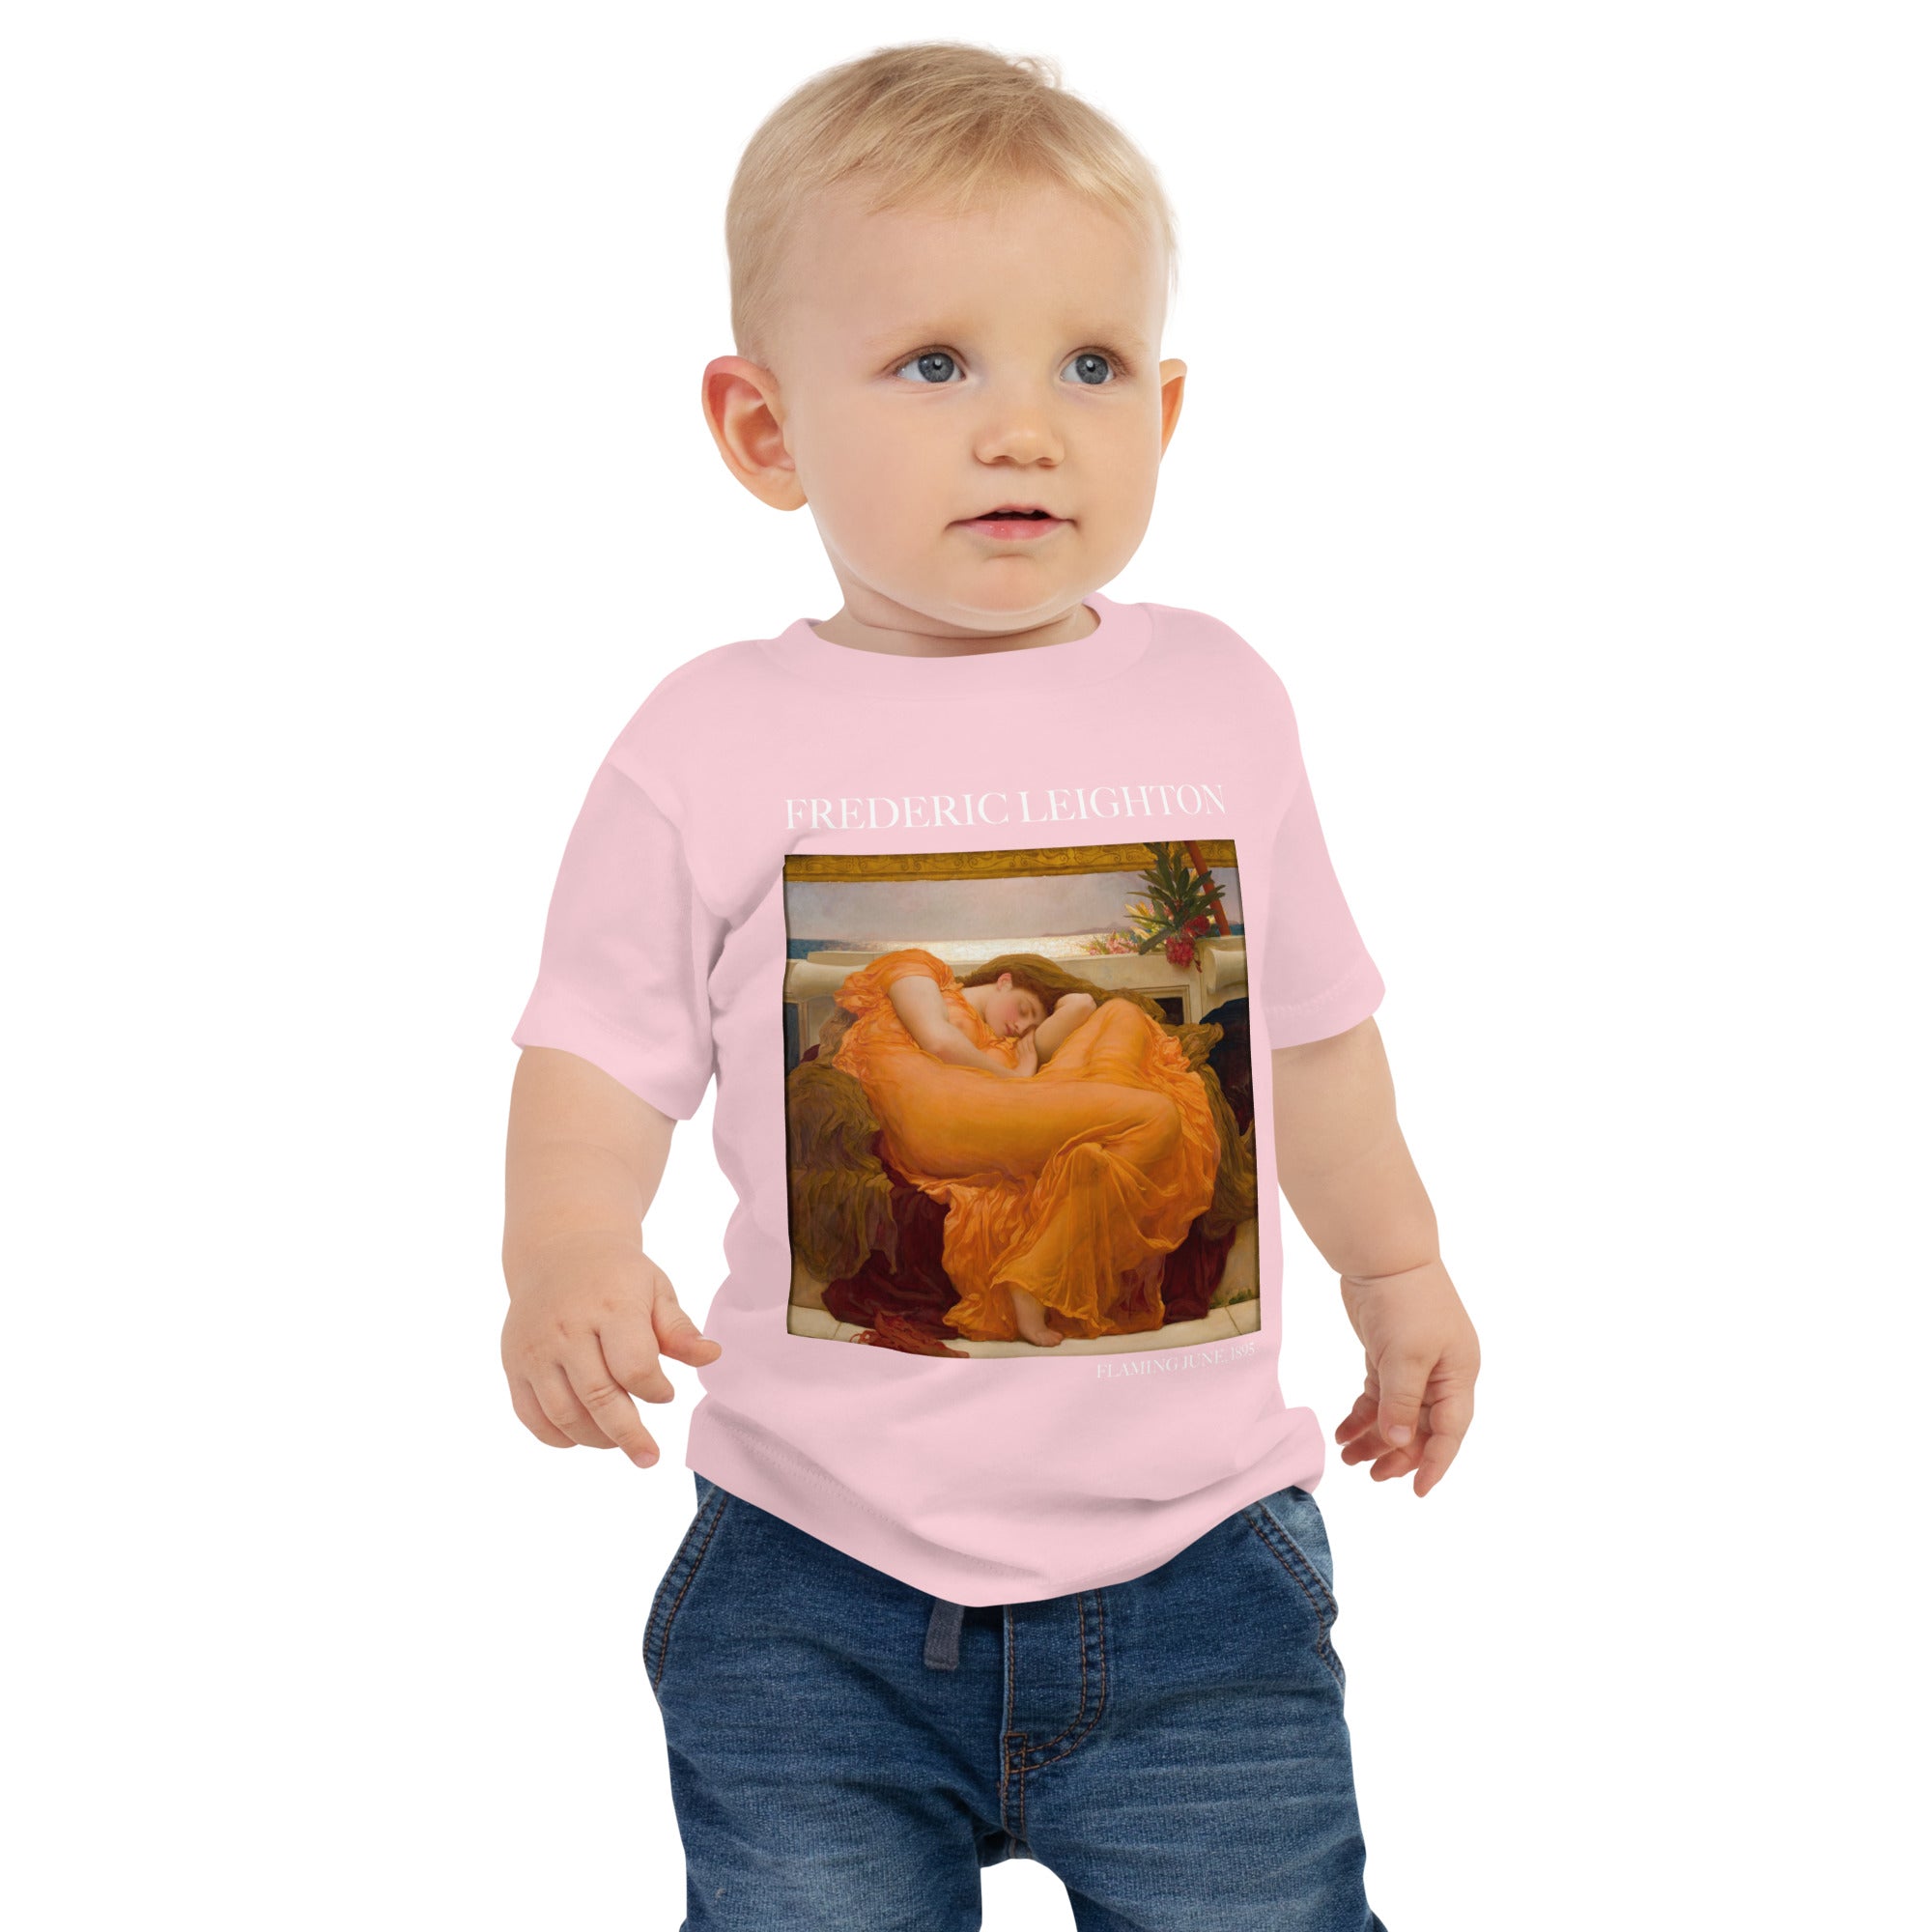 Frederic Leighton 'Flaming June' Famous Painting Baby Staple T-Shirt | Premium Baby Art Tee